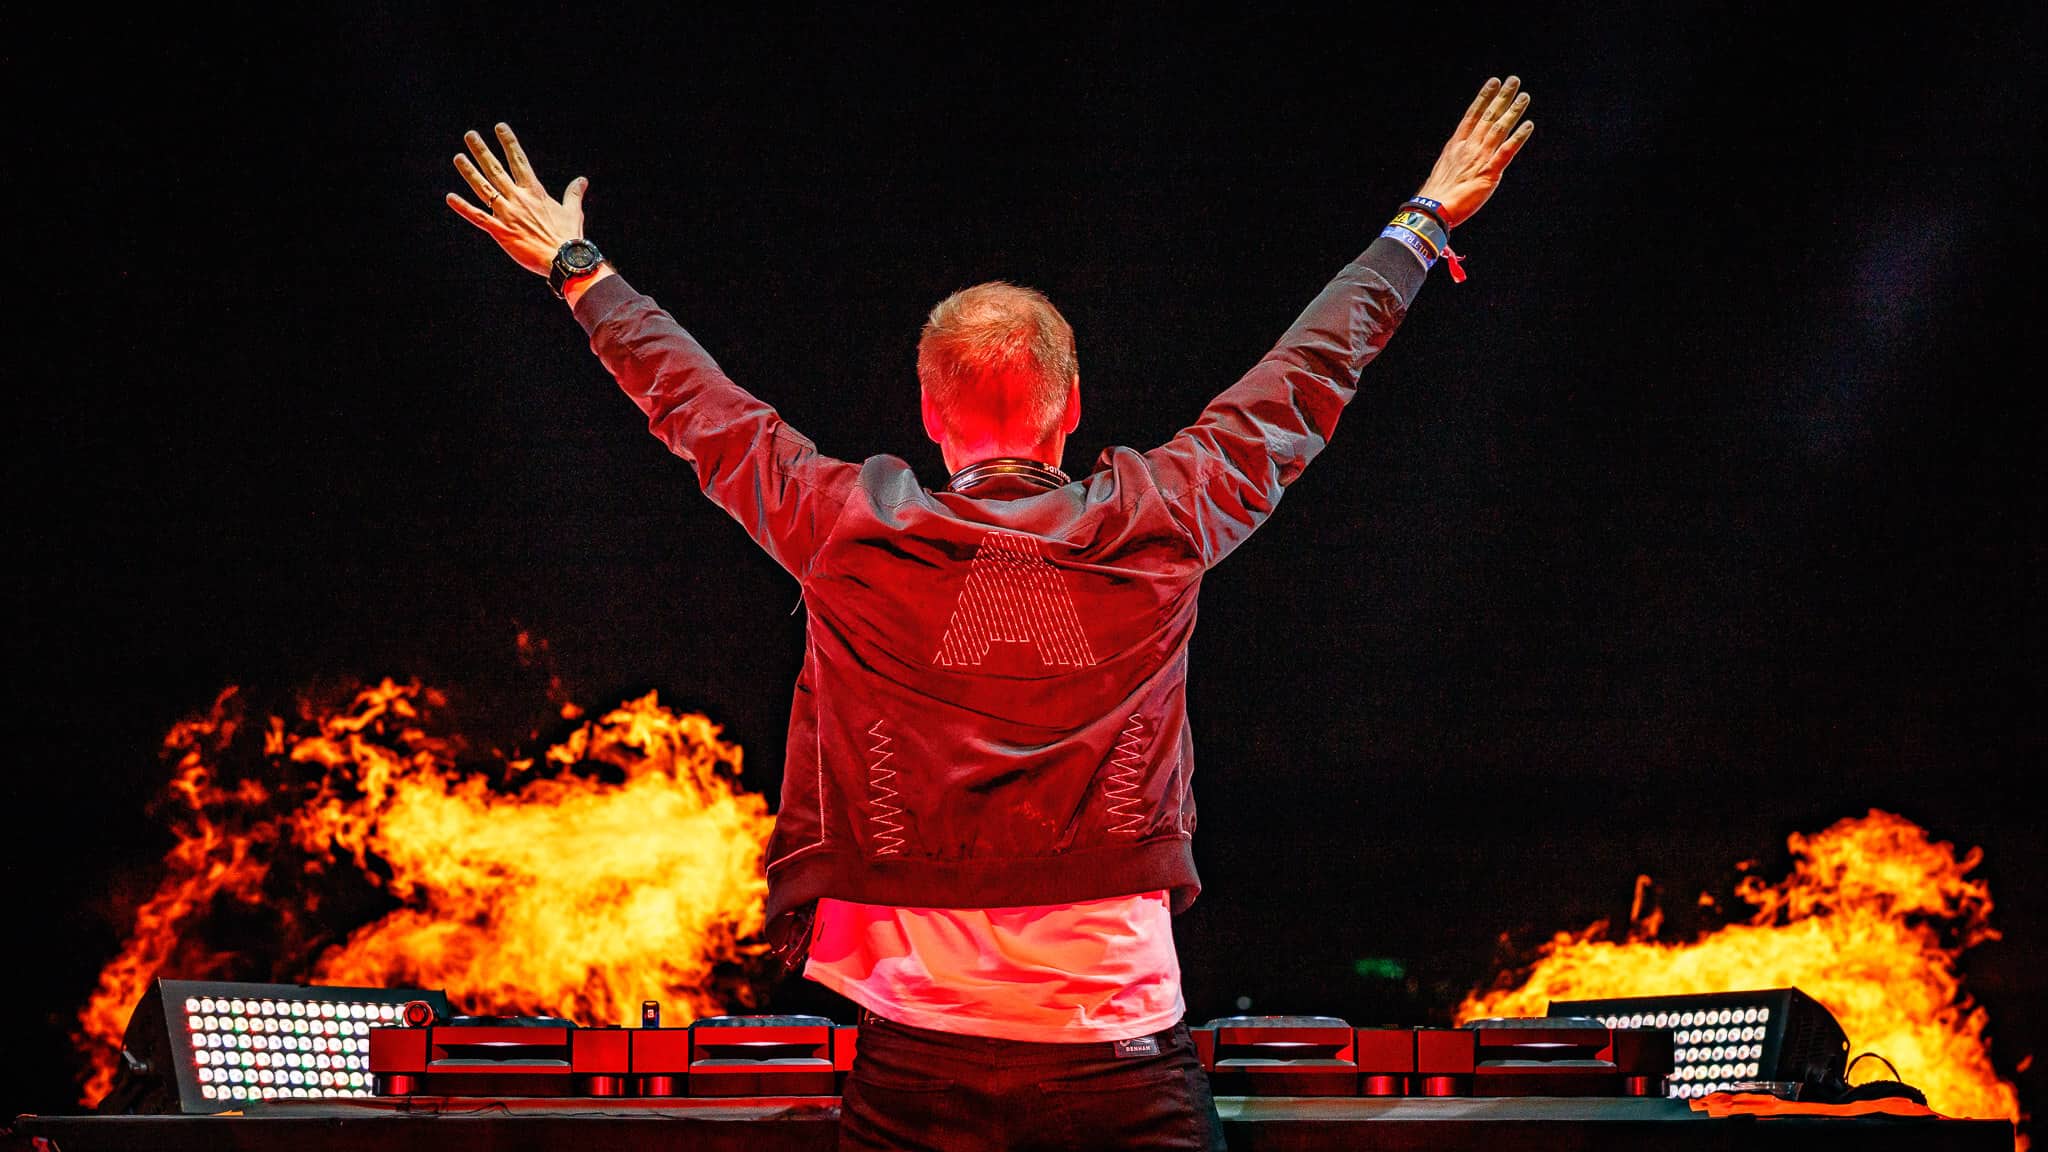 Armin van Buuren elevates D.O.D’s ‘So Much In Love’ with energetic remix